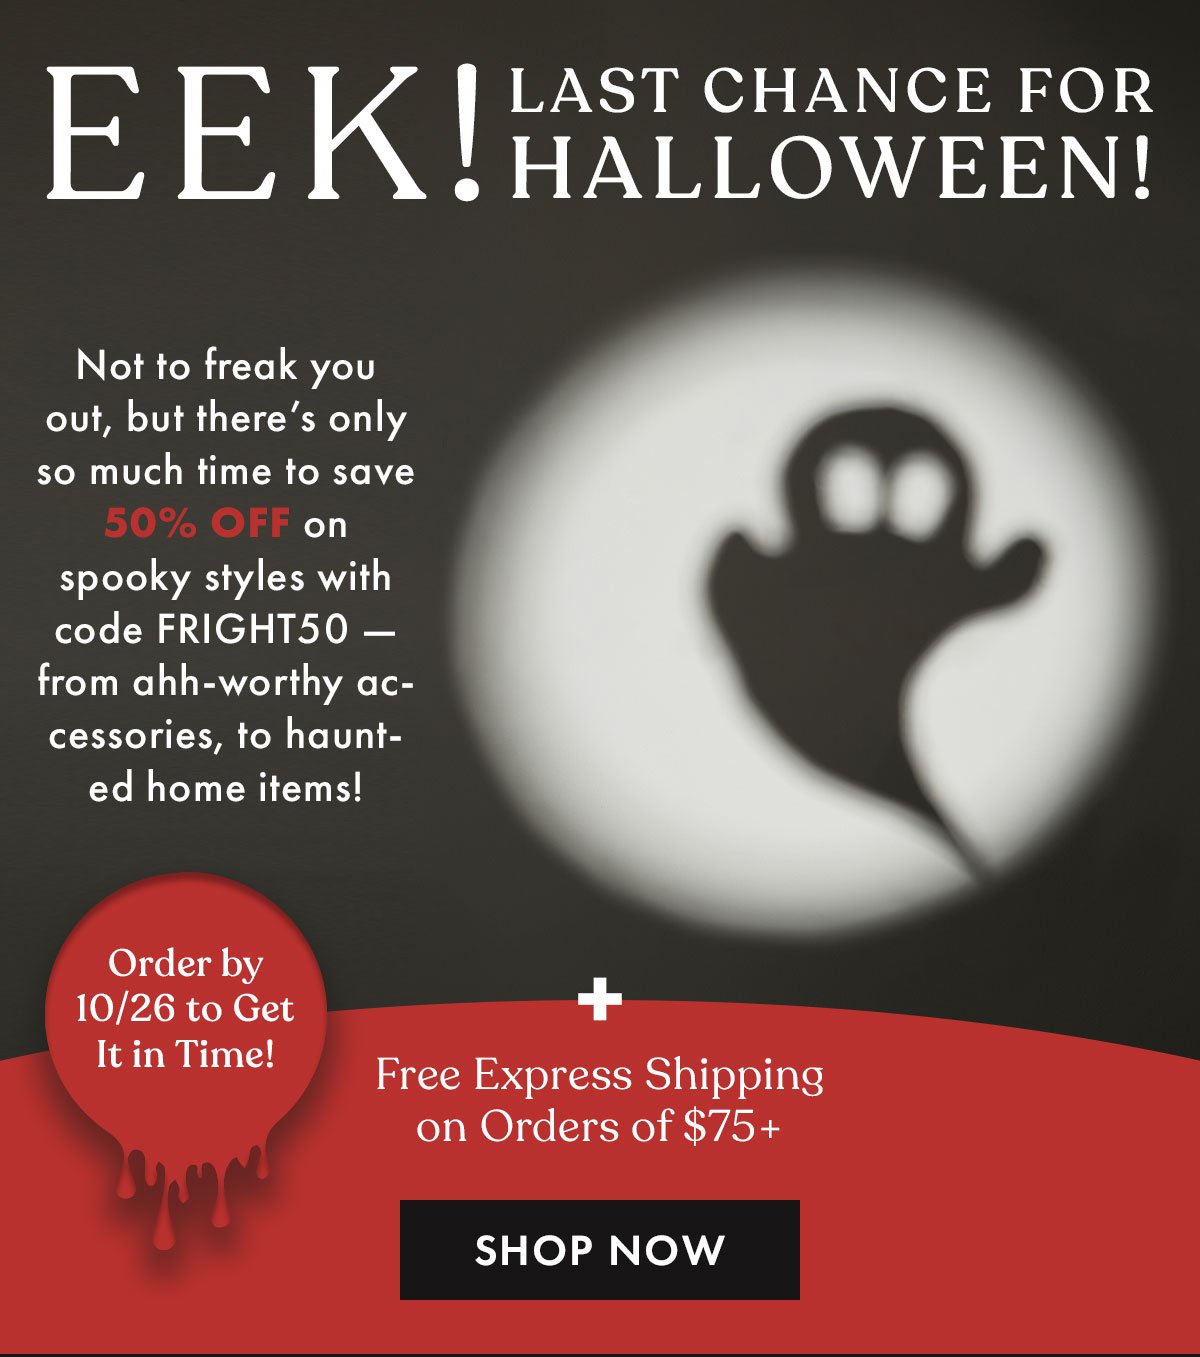 Eek! Last Chance for Halloween!